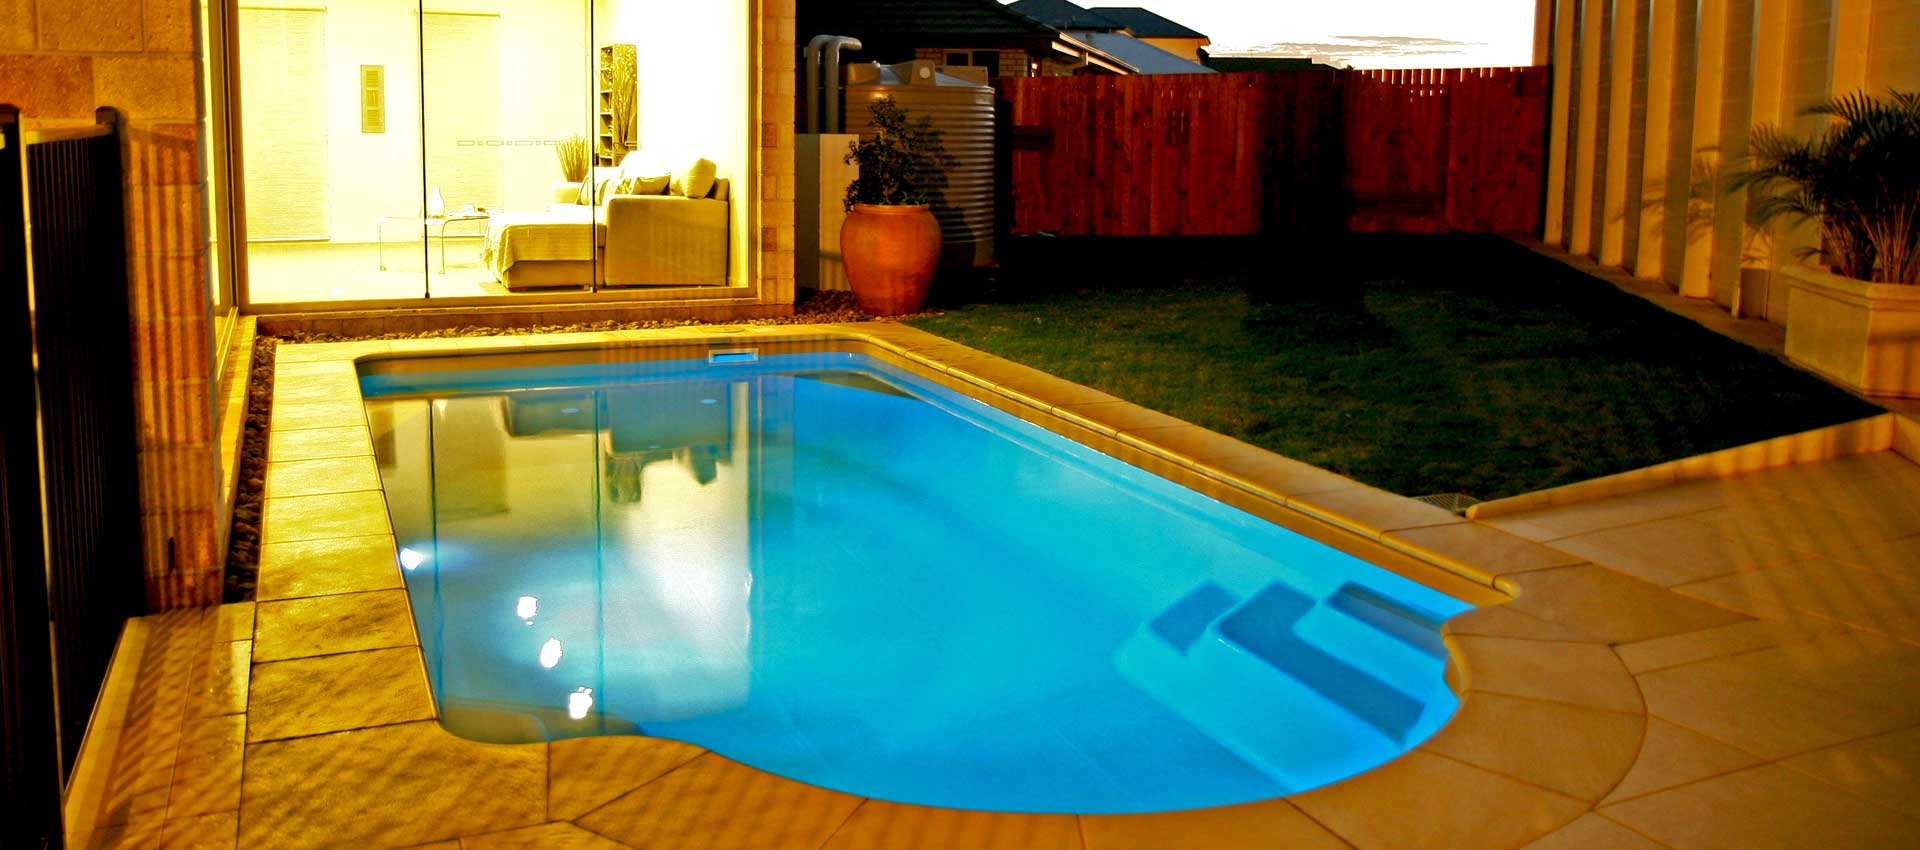 Lagoona is a modern geometric style pool